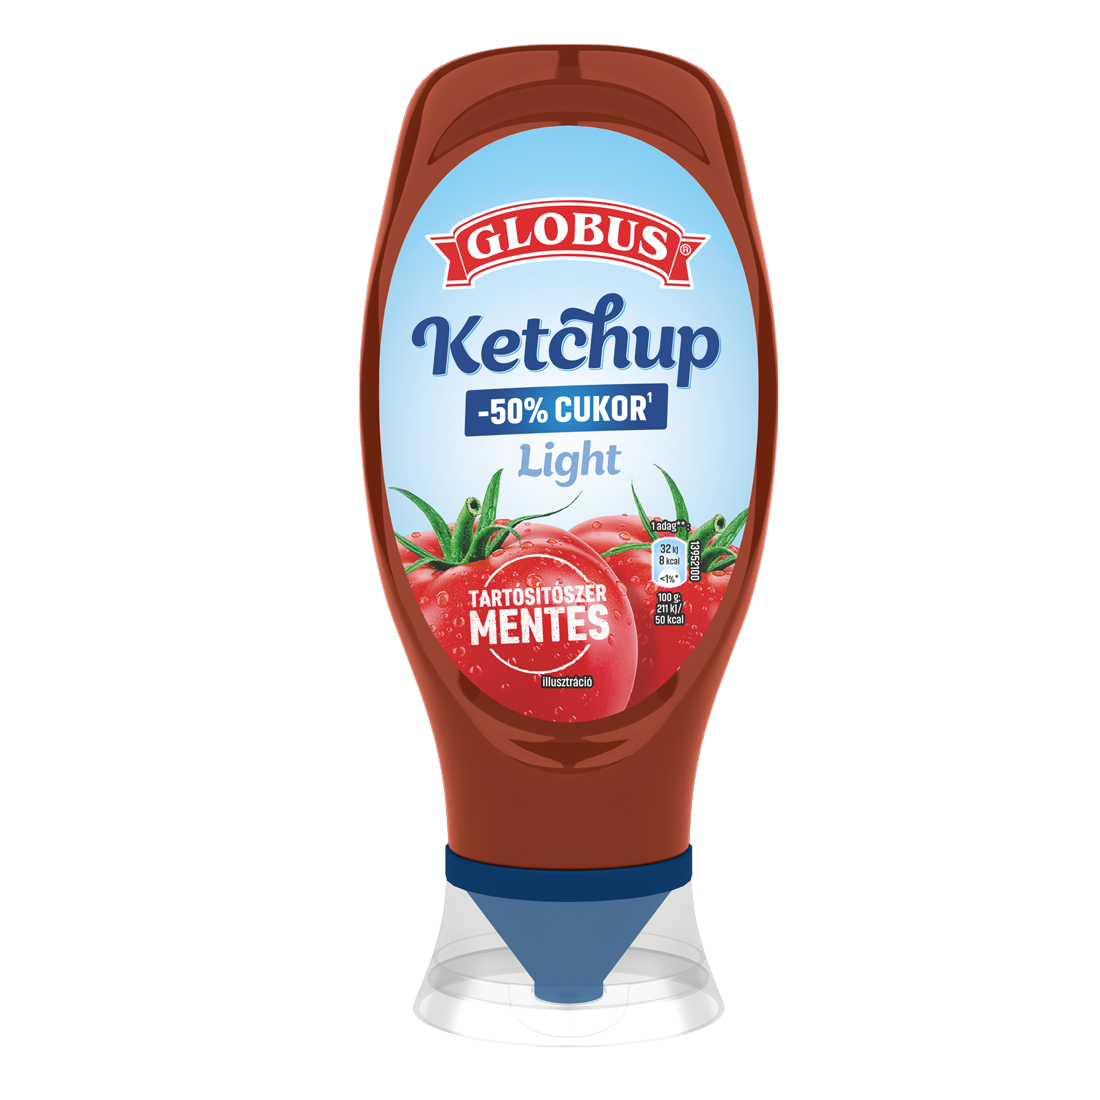 Globus Ketchup light